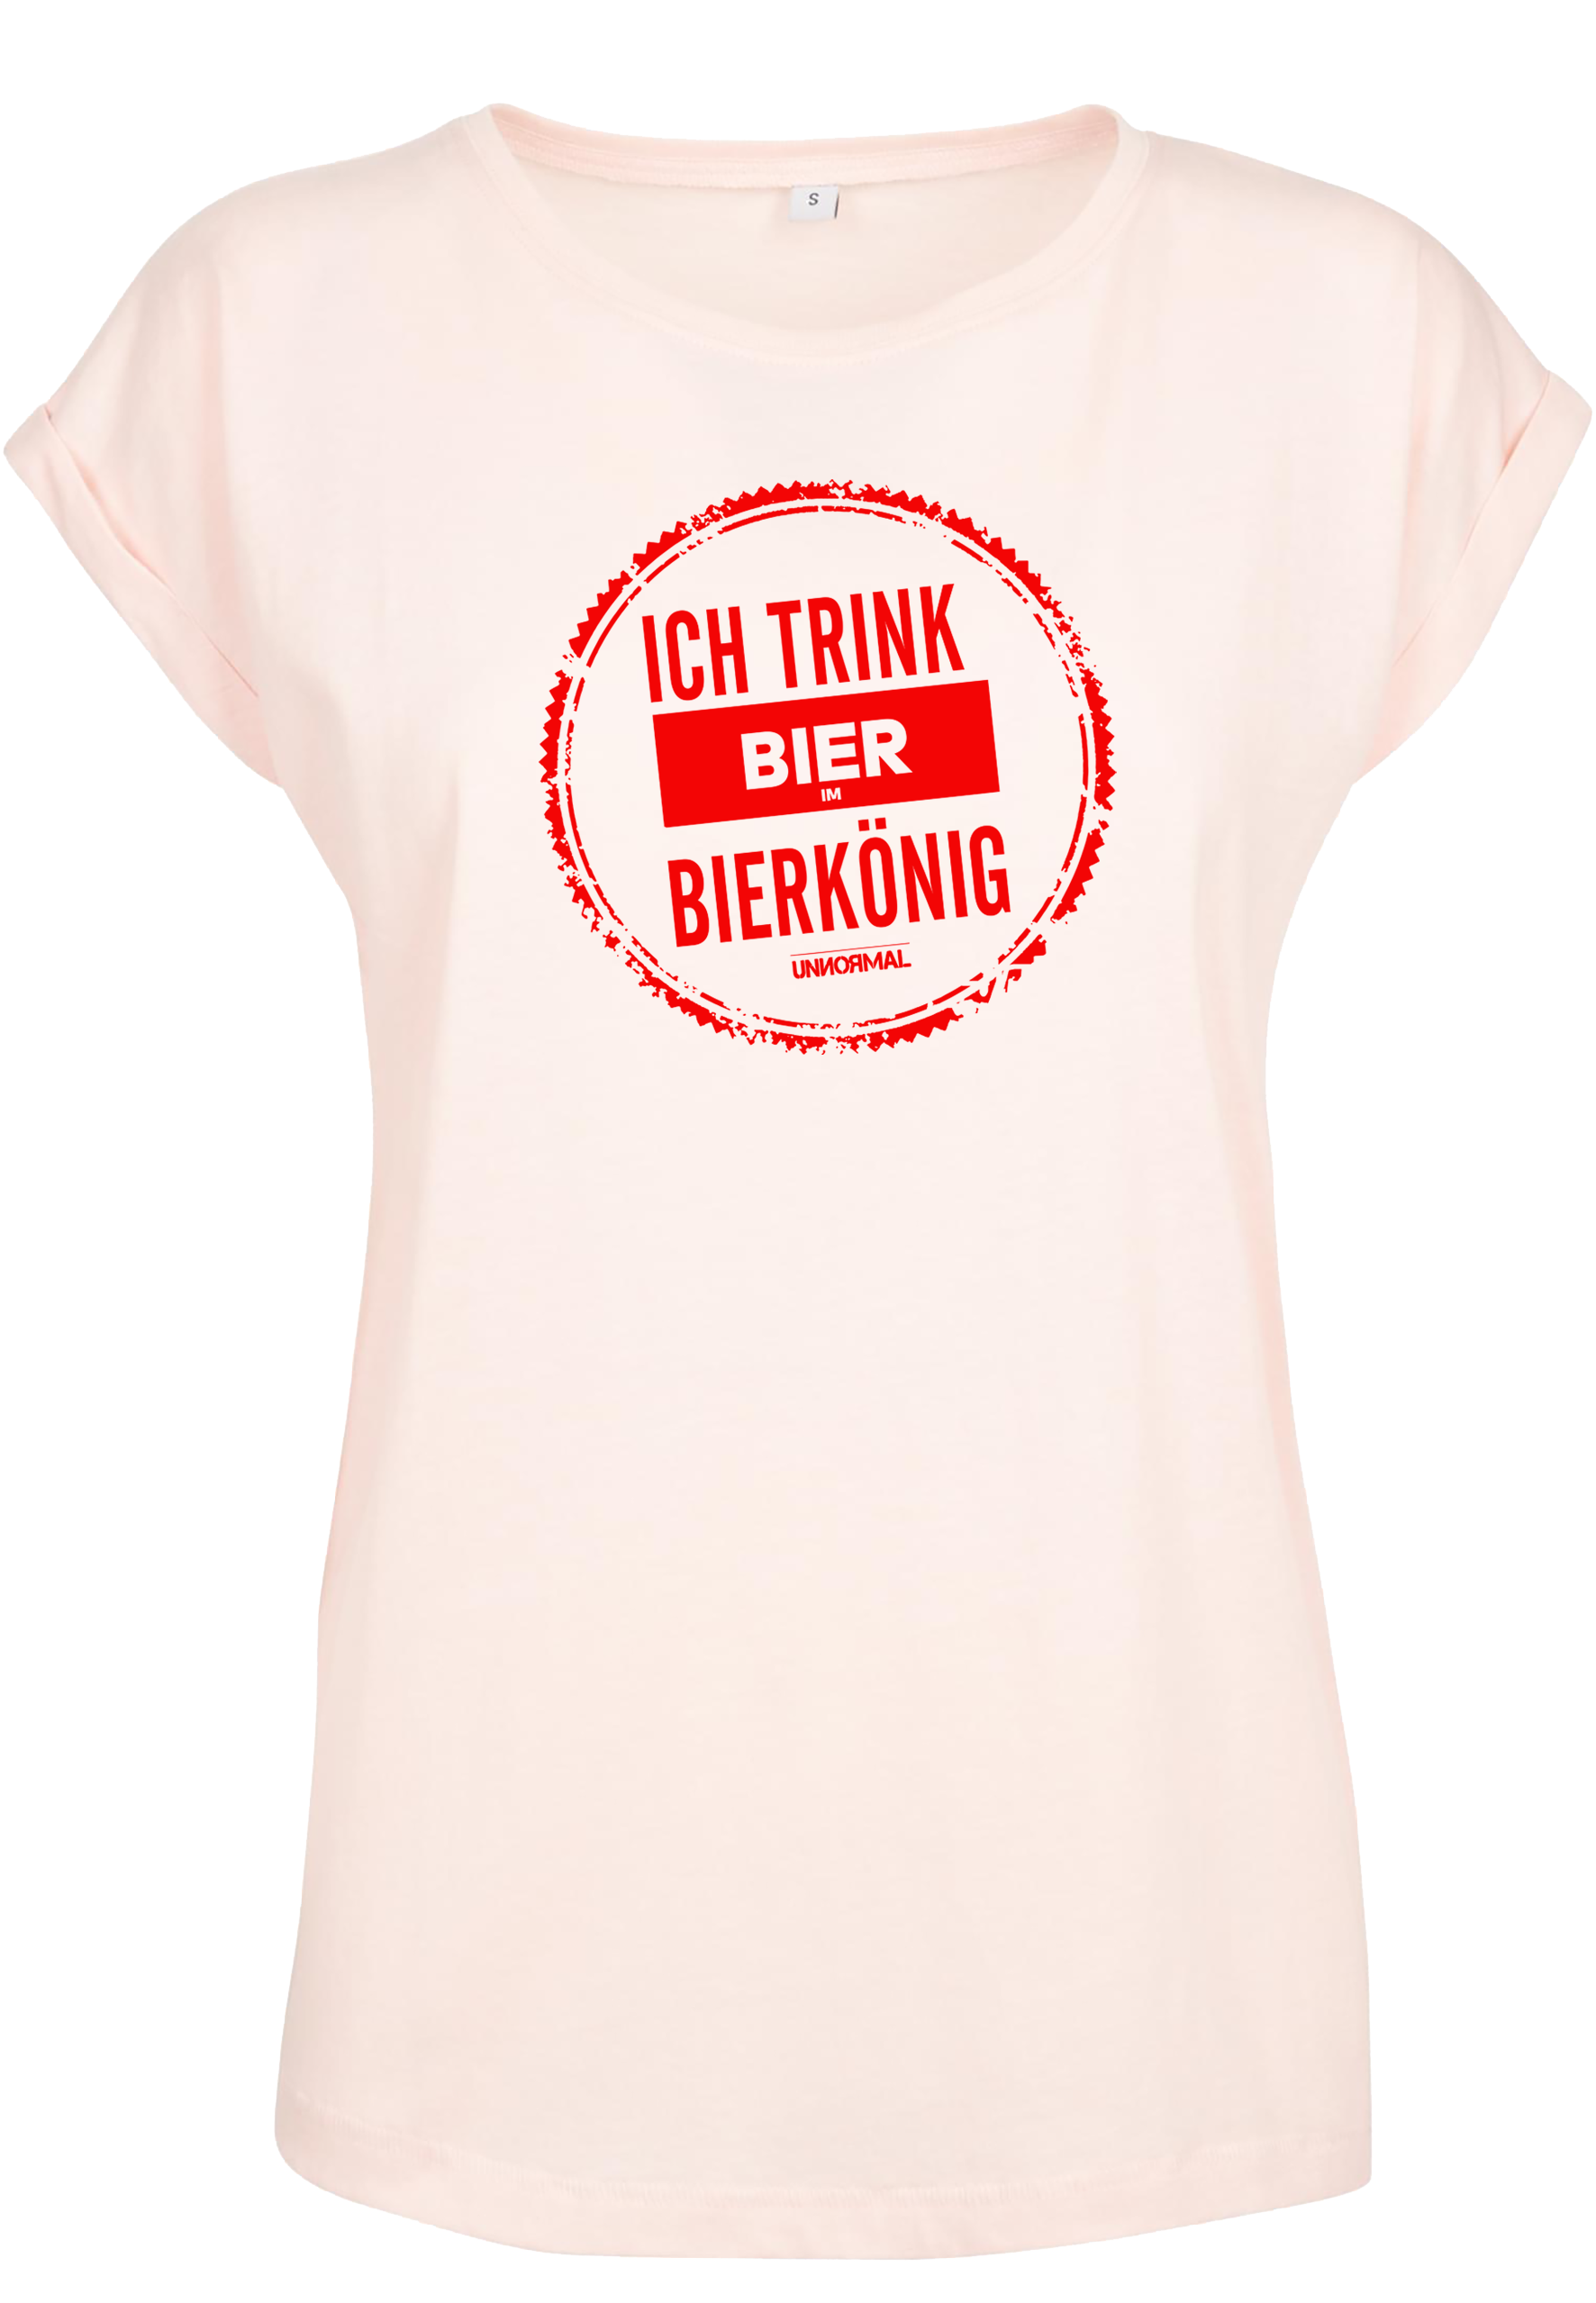 UNNORMAL - Bierkönig - Girl Extended Shirt [pink]